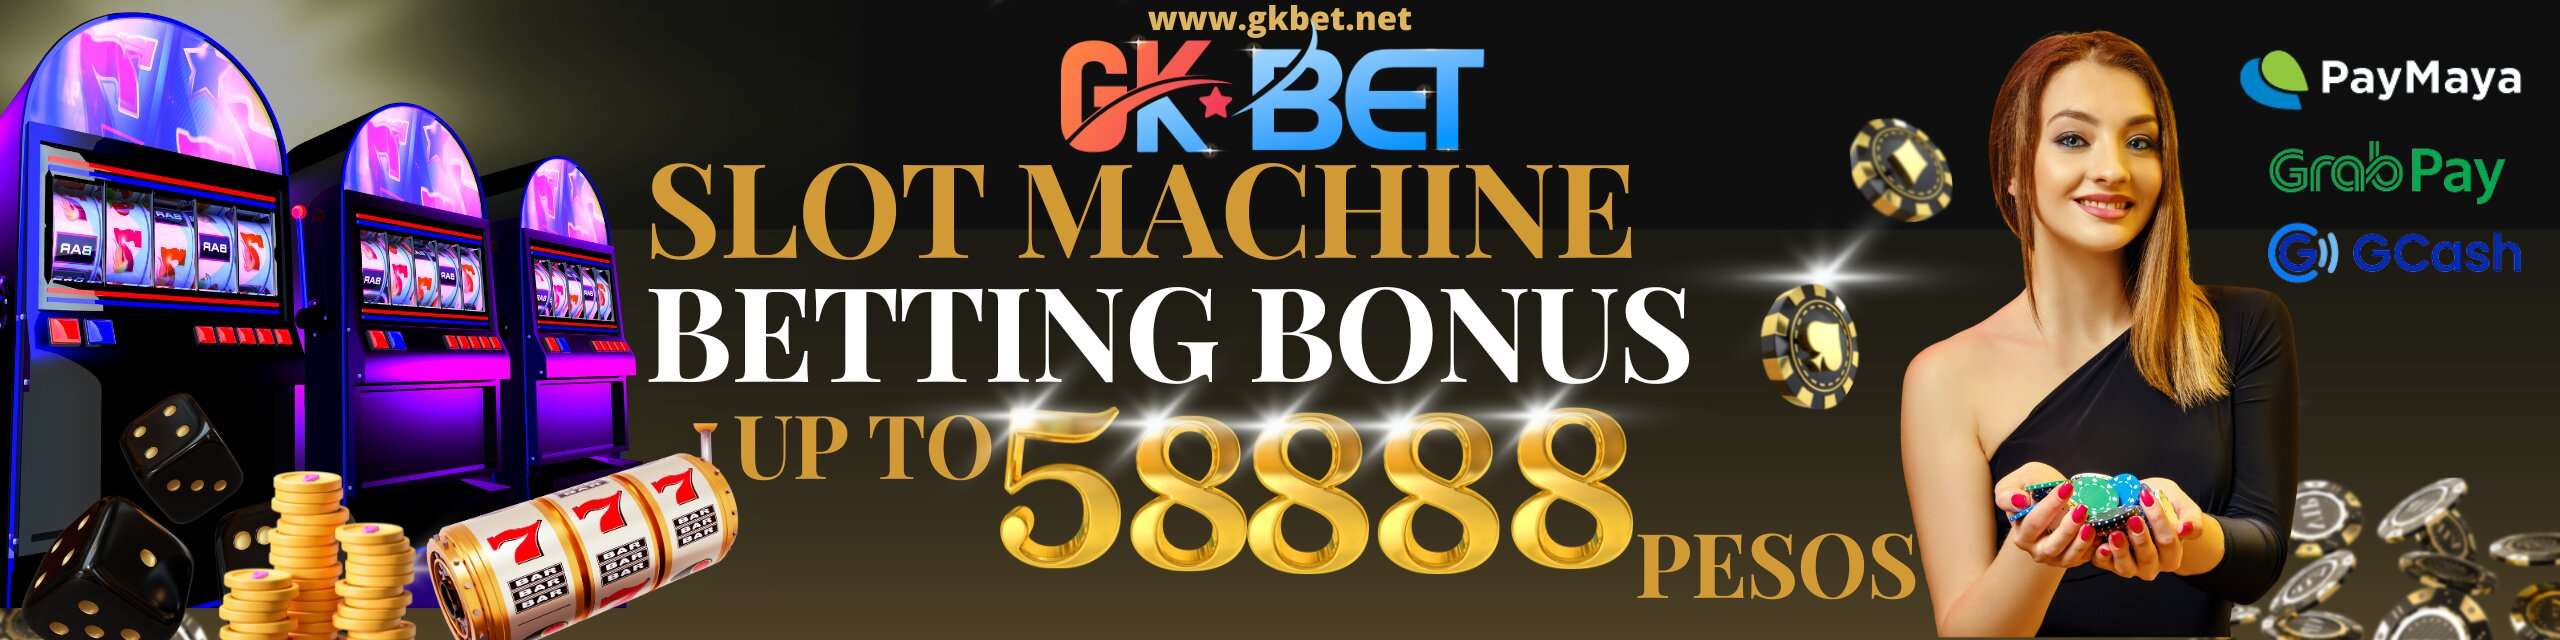 GKBET - Slot Machine Betting Bonus